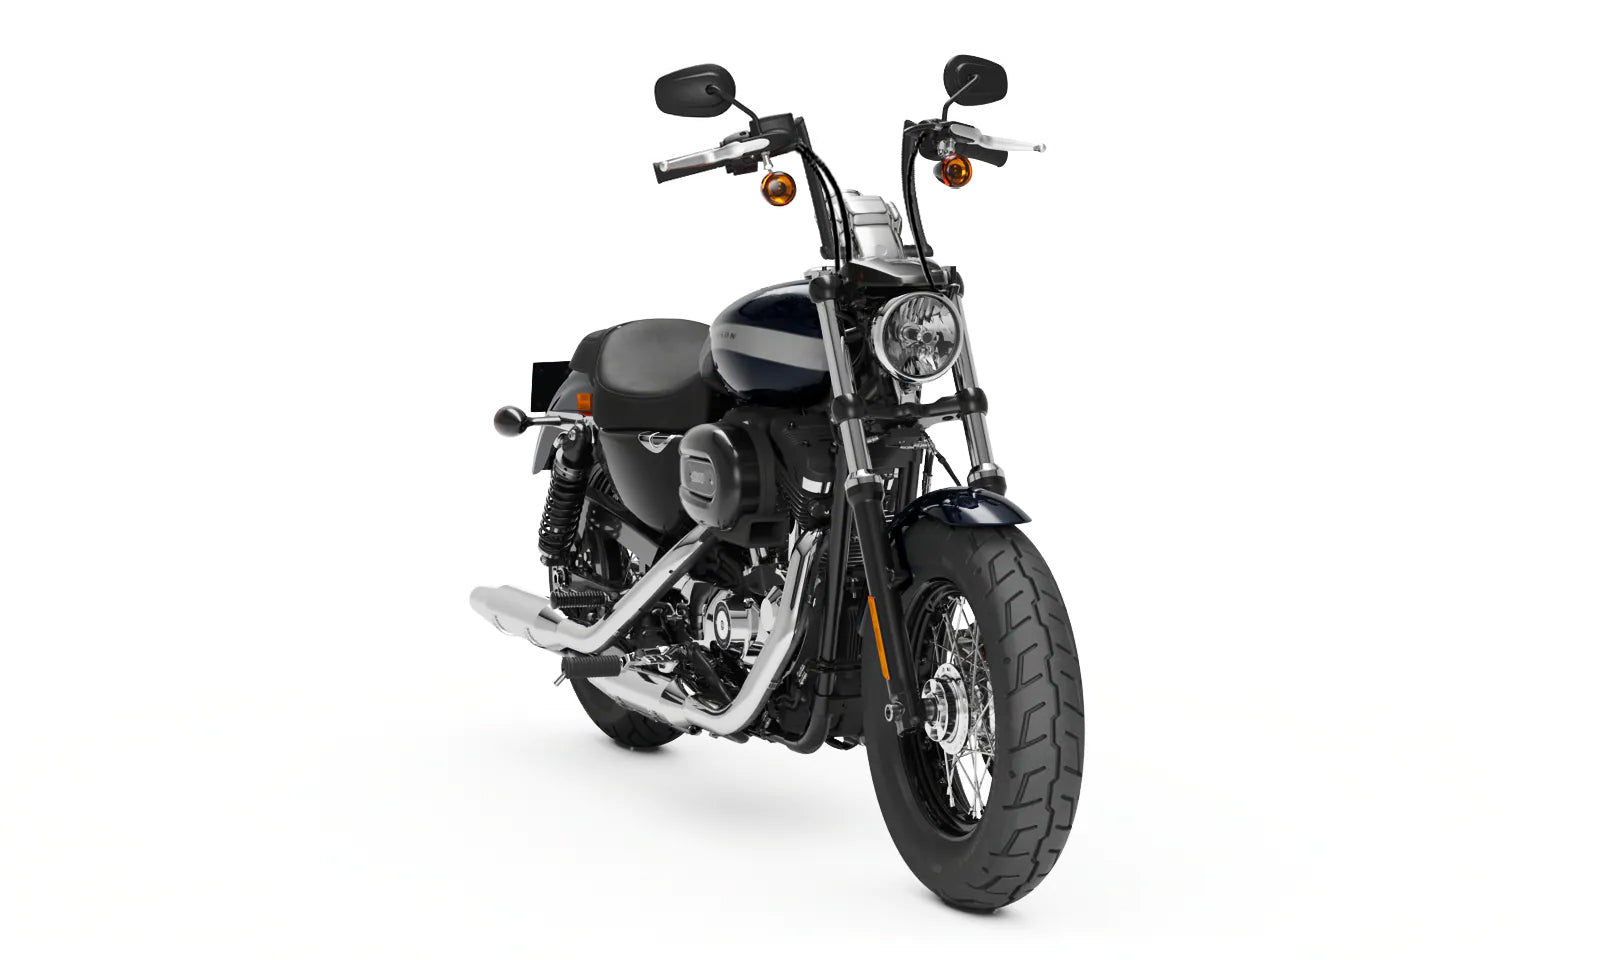 Viking Iron Born 9" Handlebar for Harley Sportster 1200 Custom XL1200C Matte Black Bag on Bike View @expand